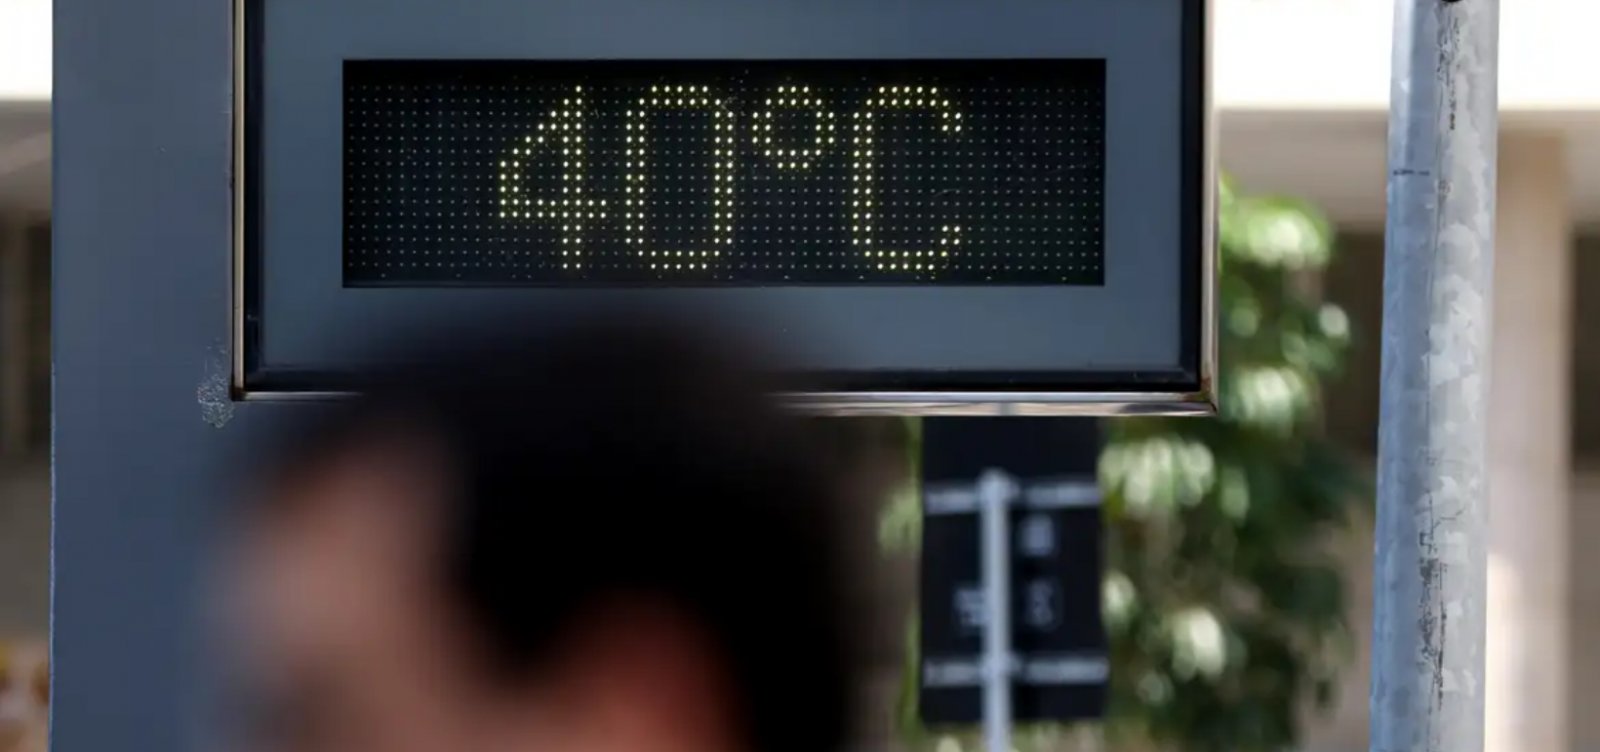 Consumo de energia bate recorde no Brasil devido ao aumento da temperatura